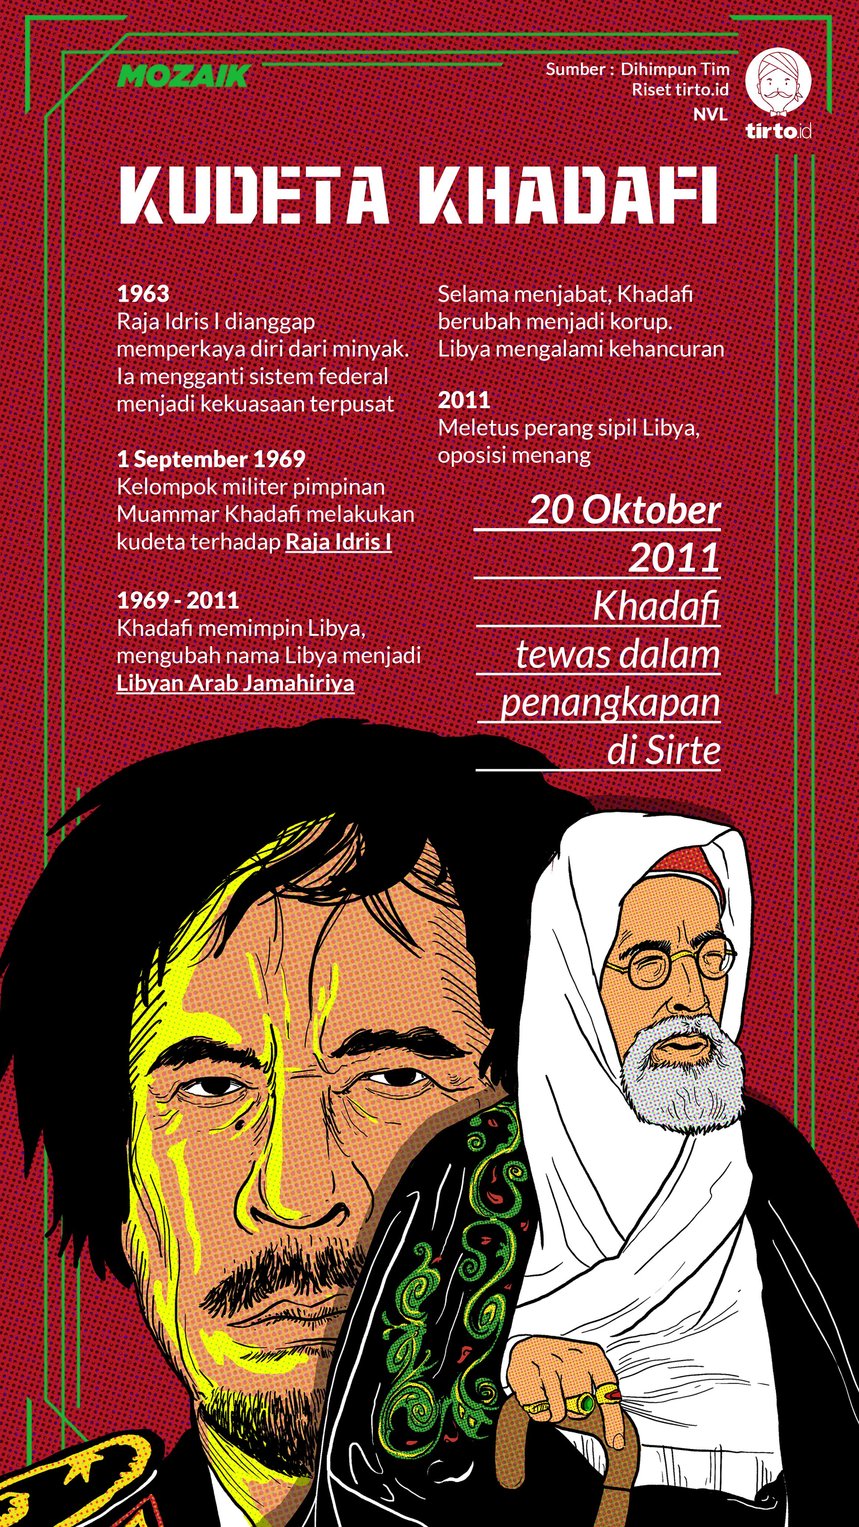 Infografik Mozaik Kudeta Khadafi